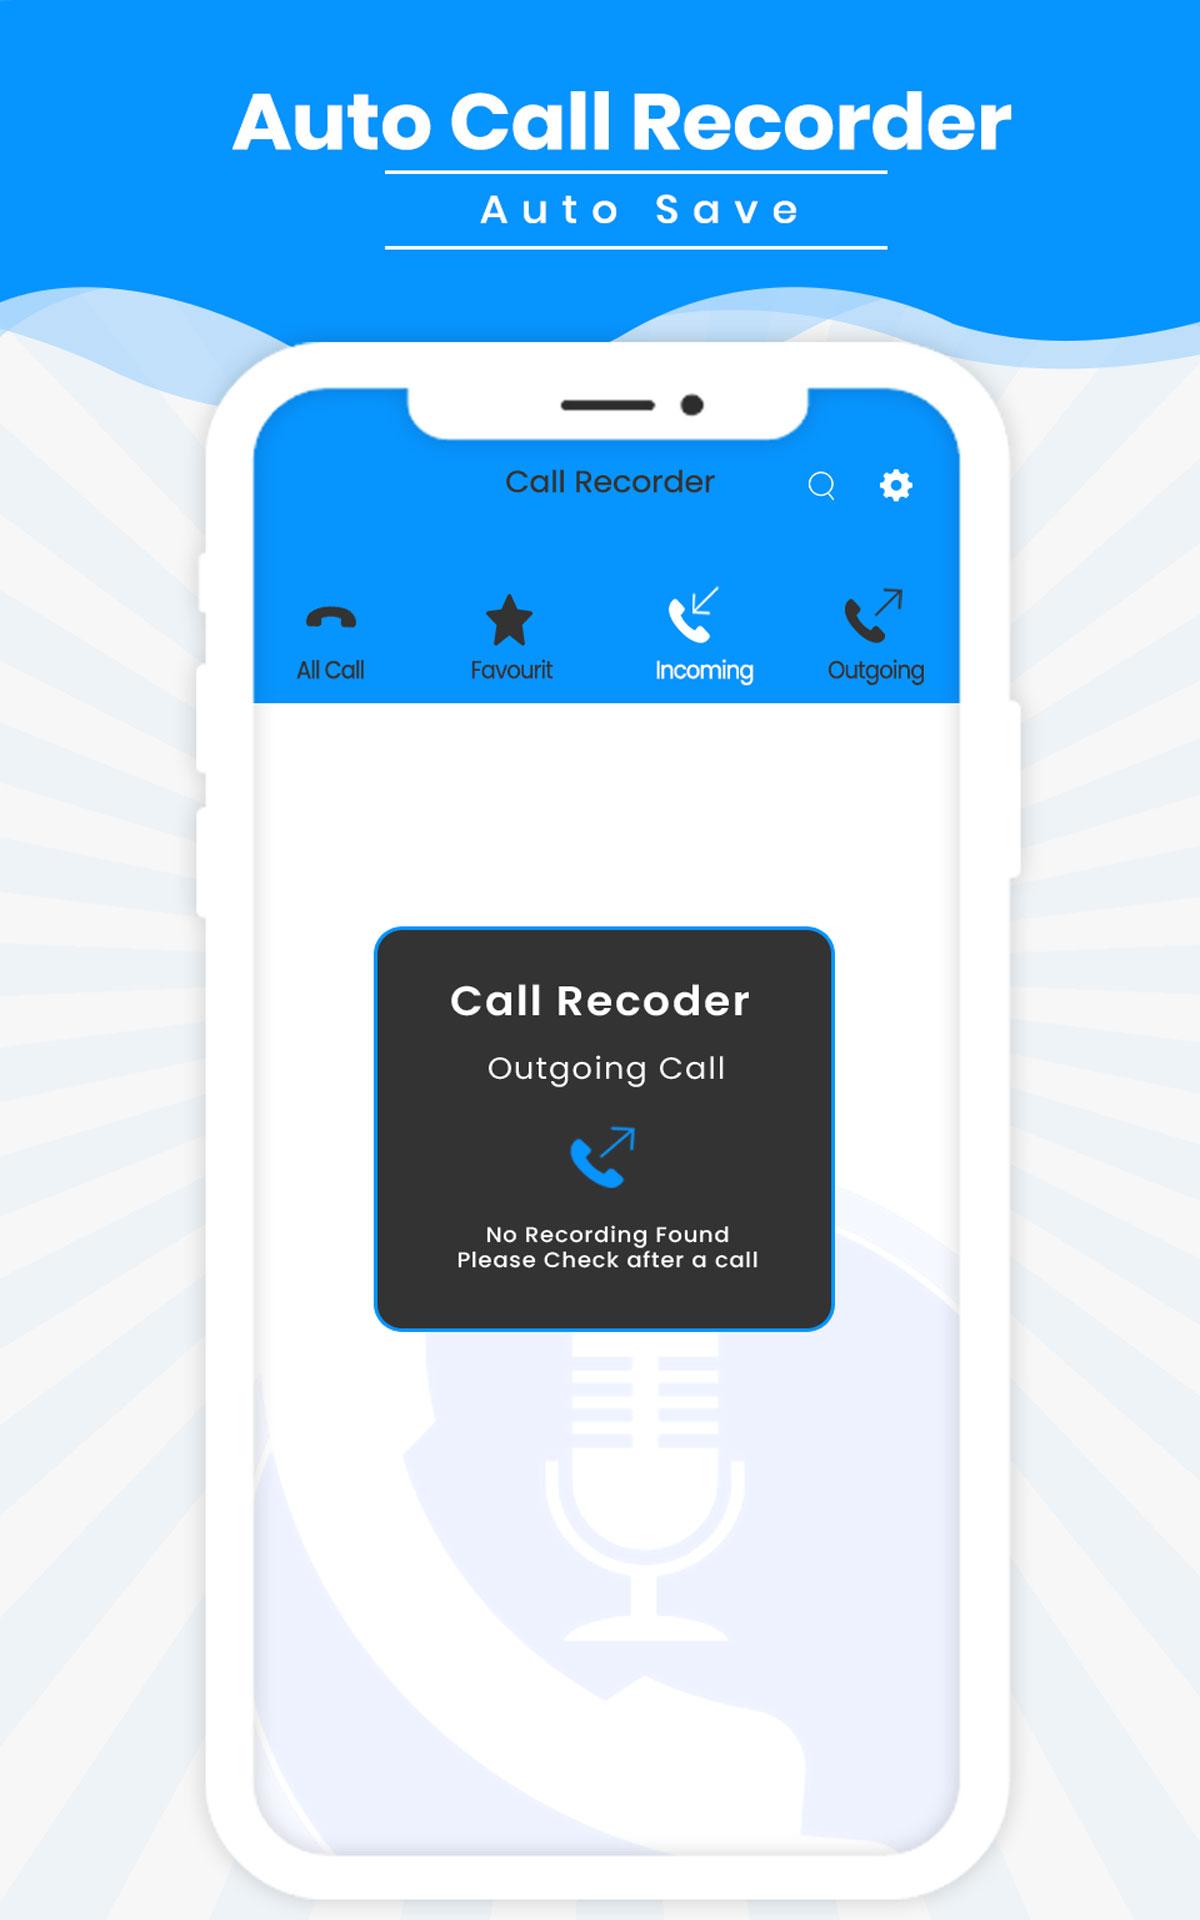 Auto Call Recorder - Auto Save 1.0.4 Screenshot 12